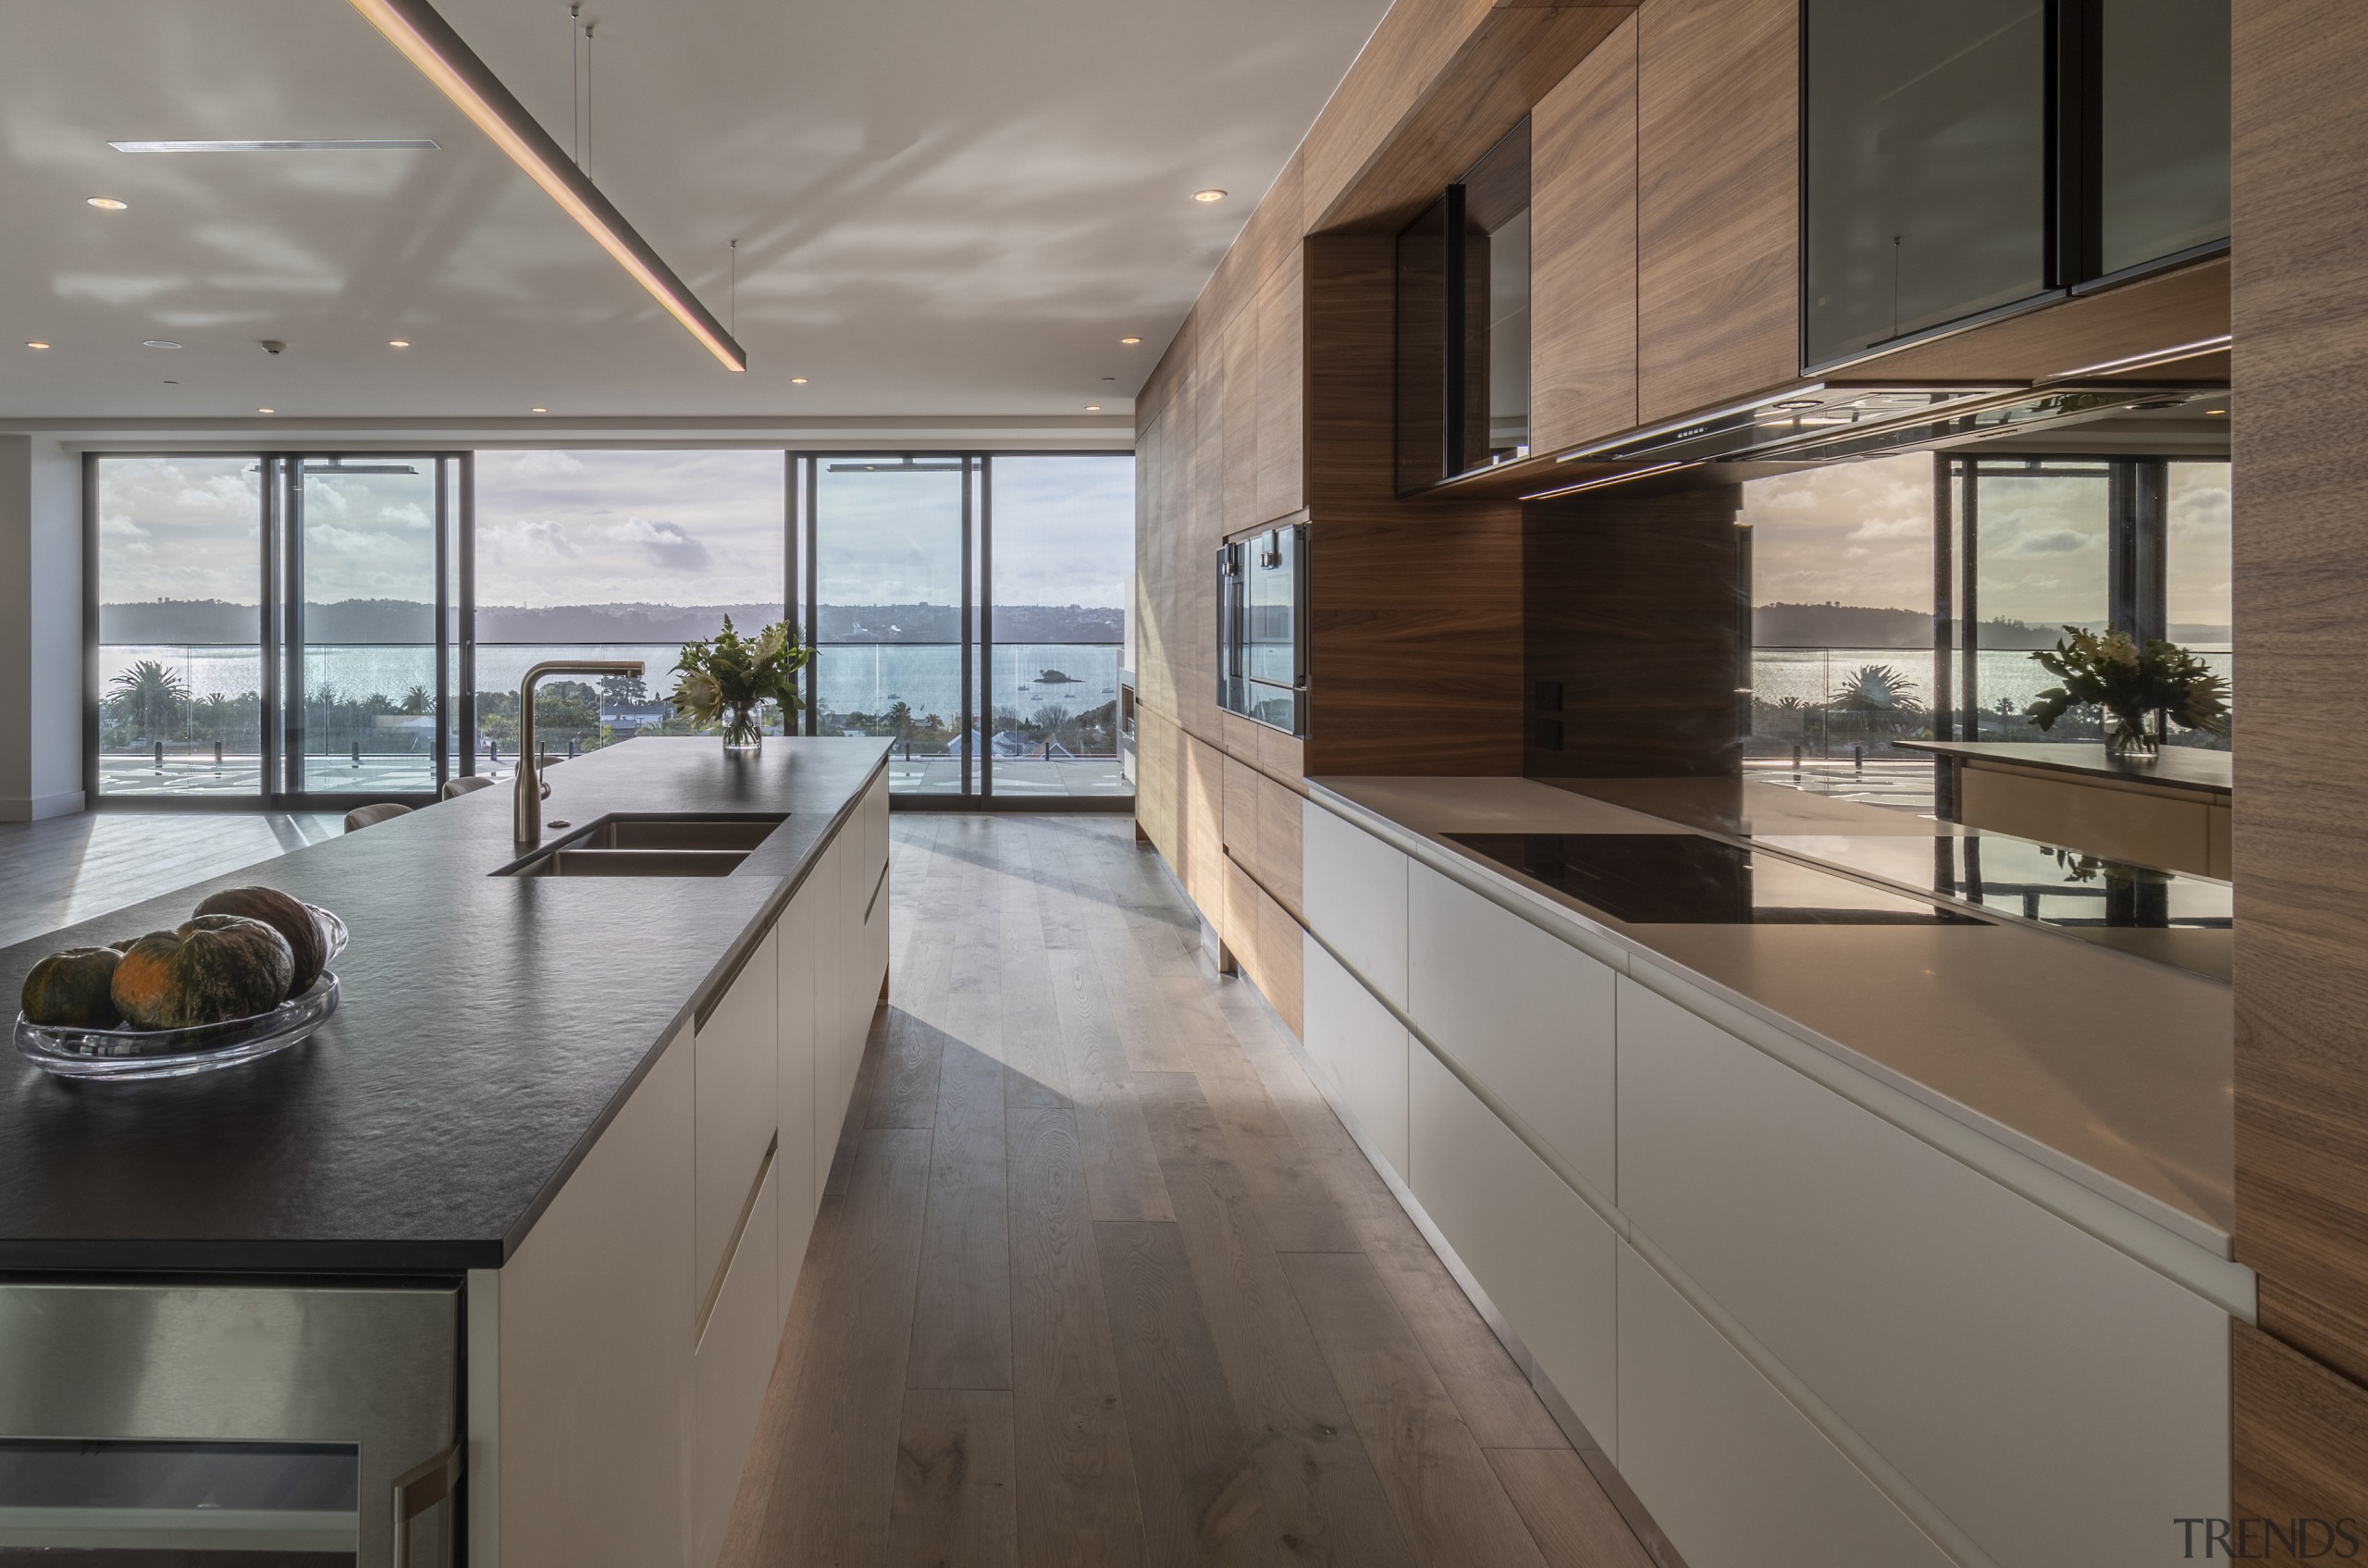 The penthouse kitchen enjoys spectacular views. 